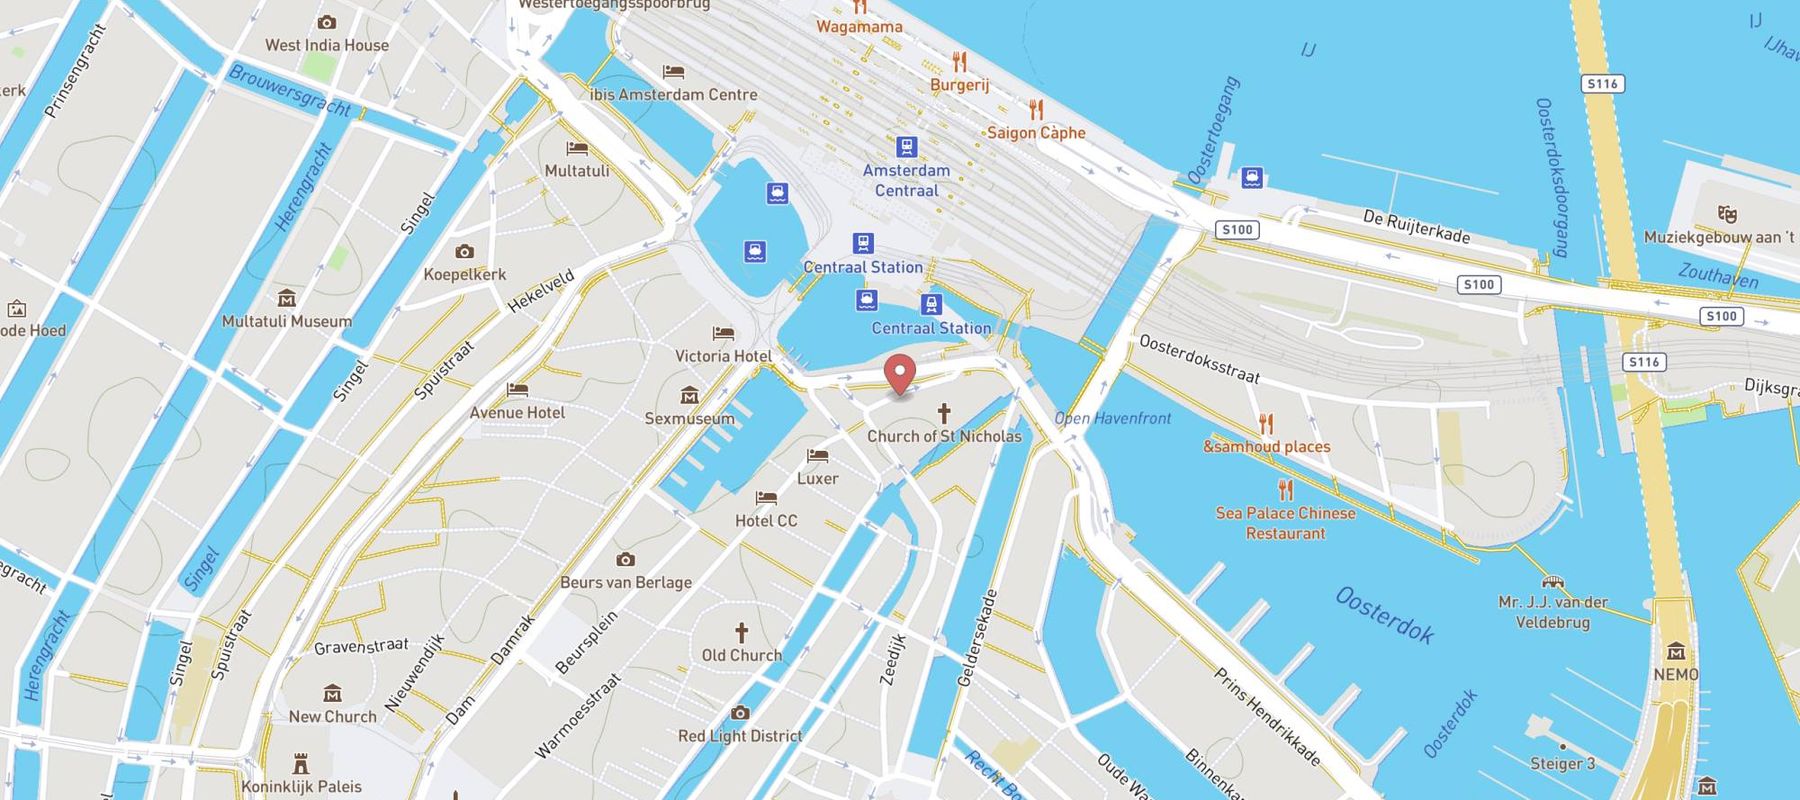 Hotel NH Collection Amsterdam Barbizon Palace map